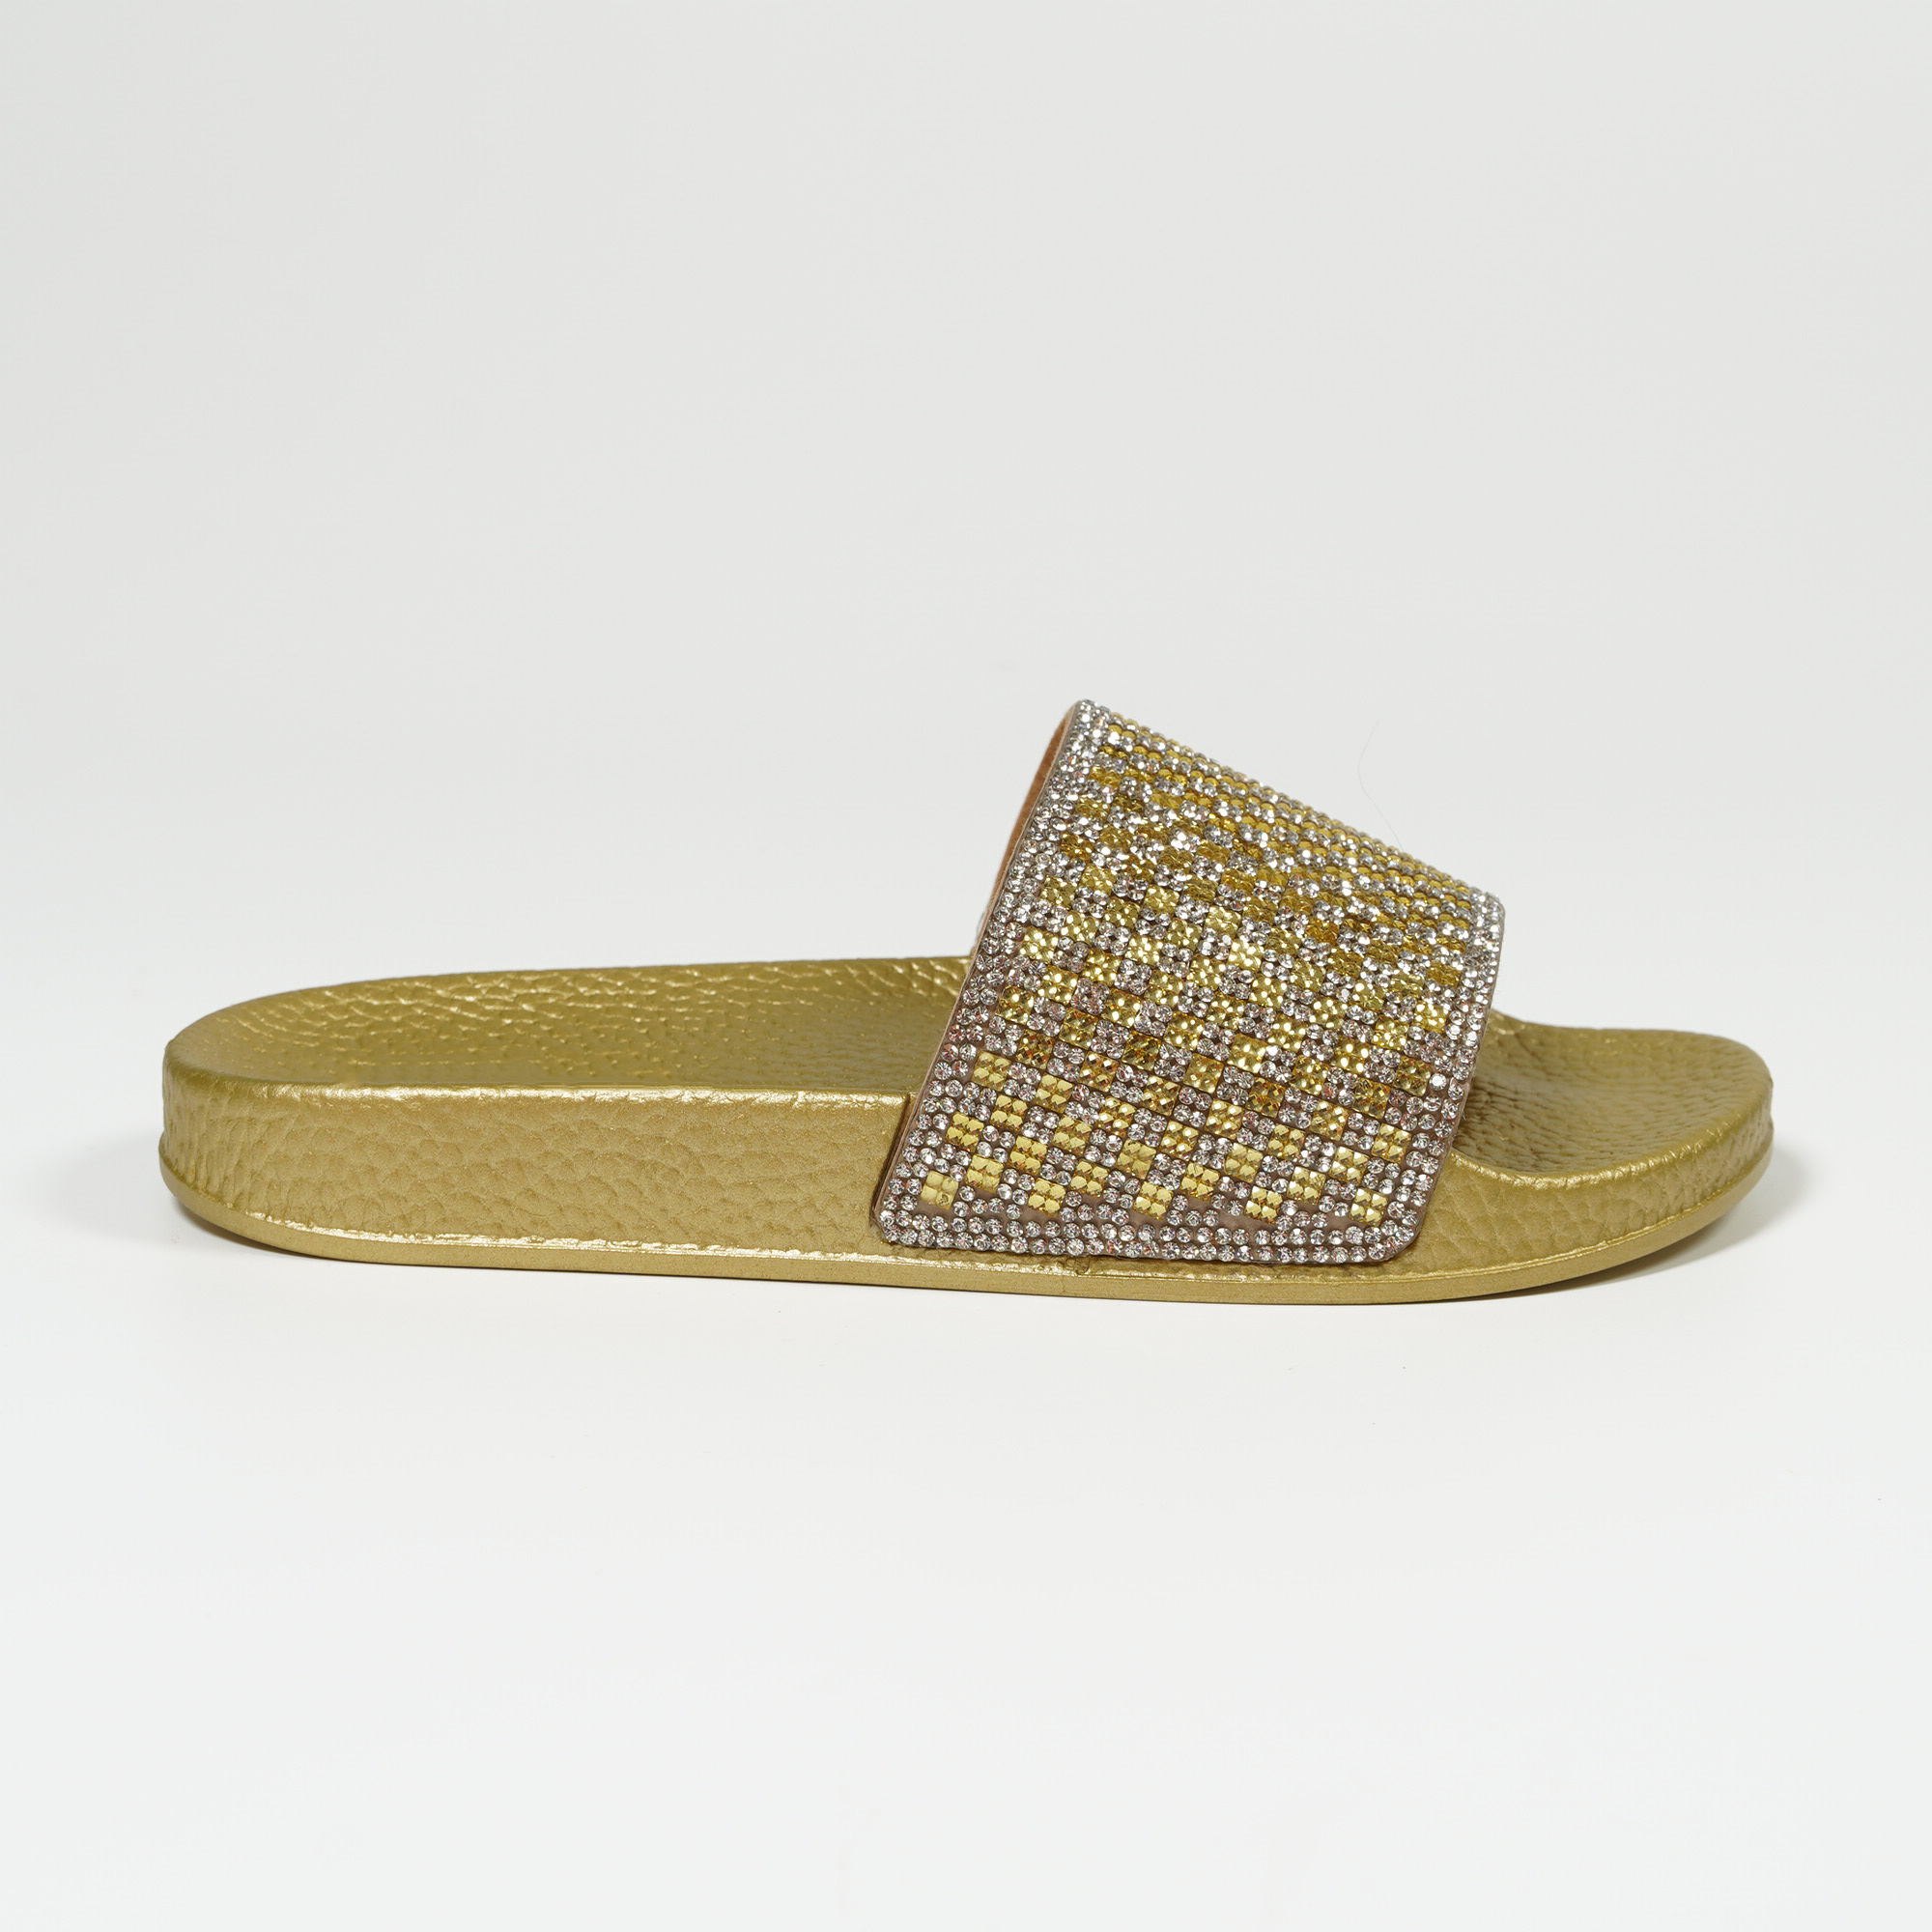 Stylish sparkling rhinestone slippers design sense indoor casual slippers